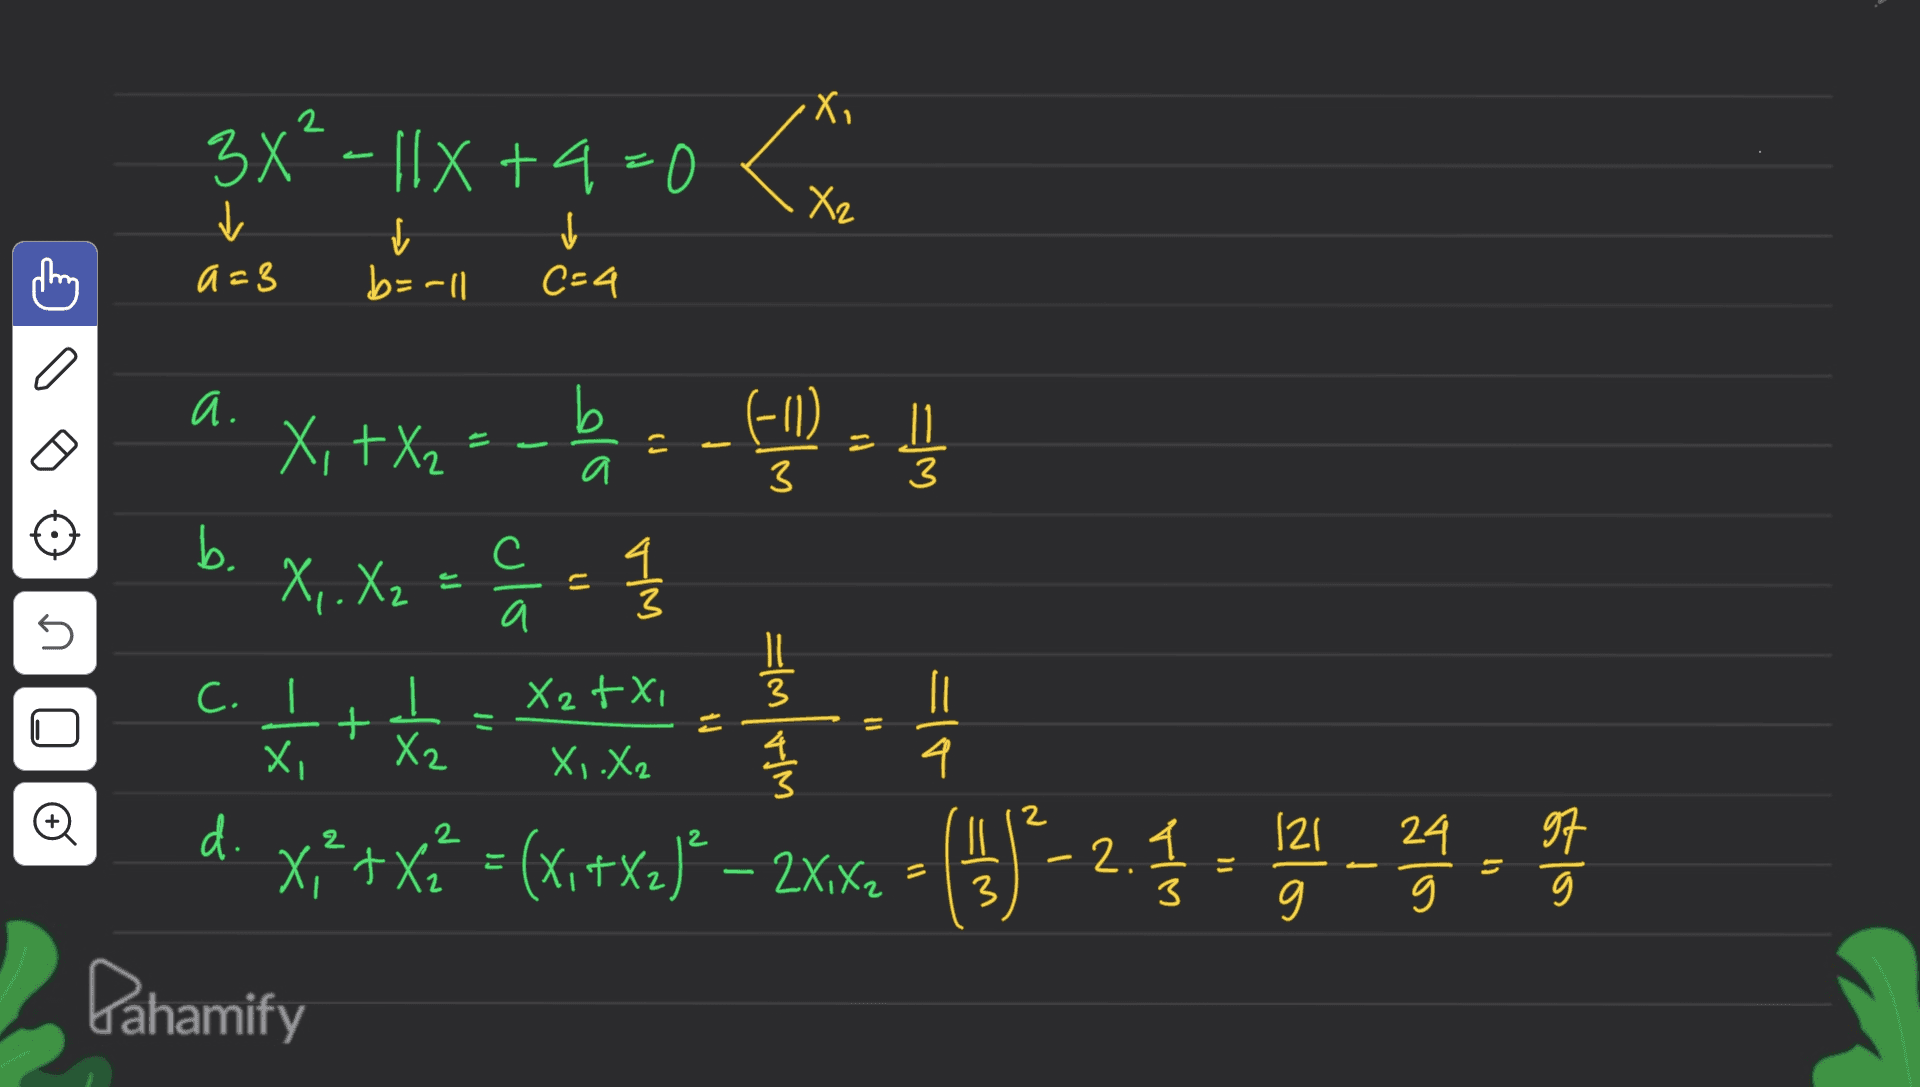 2 X, 34² - 11x +4=0 - +9 CM Х, ✓ b=-11 ✓ C=4 a=3 a. b -11) 11. 3 a 3 b. с X,.X2 3 a n 1 X, +x2 = -1 = -(O) = , +Х ! X= 8 - 1 “。 // d ) - X² xi+x= (x, +xz]€ – 2X1X2 ' -(1)-2,5121 34 - Pahamify X2+X C. X *+*- xotxo I X2 XI.X2 4 o 2 d 2 2 2 . 24 97 . 3 3 